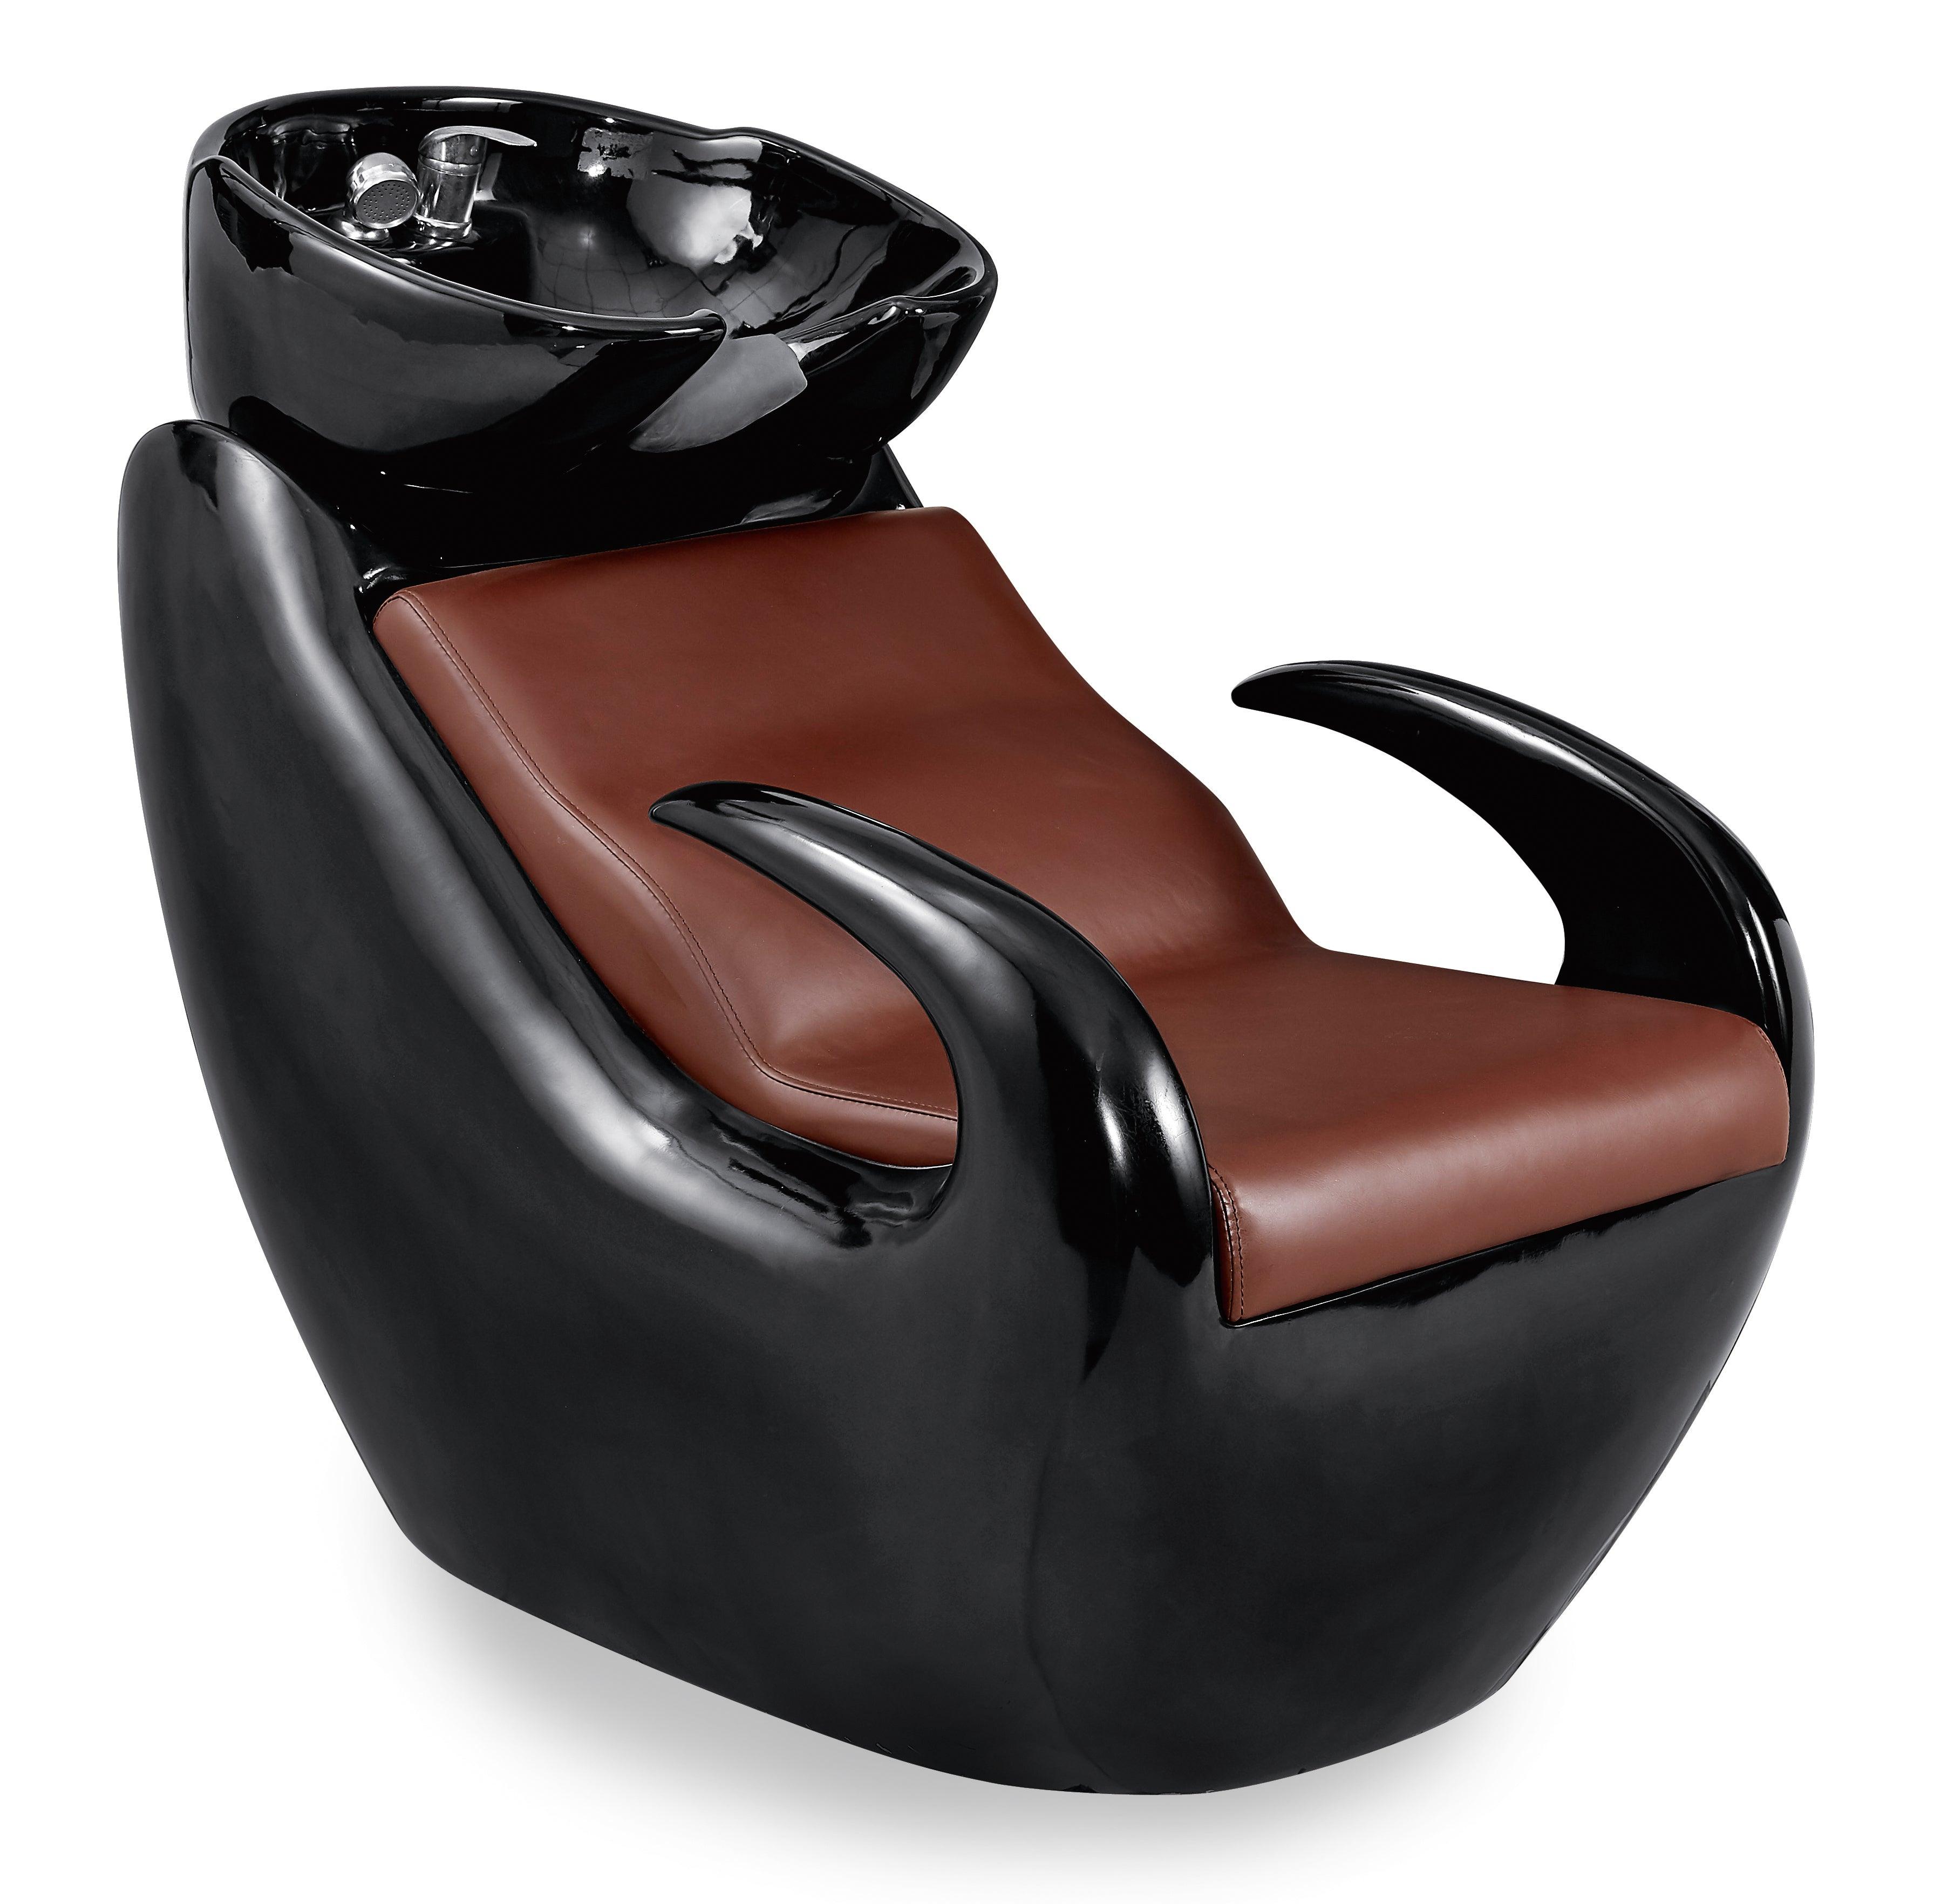 ARHAUS Shampoo Chair and Bowl Unit - Northern Interiors